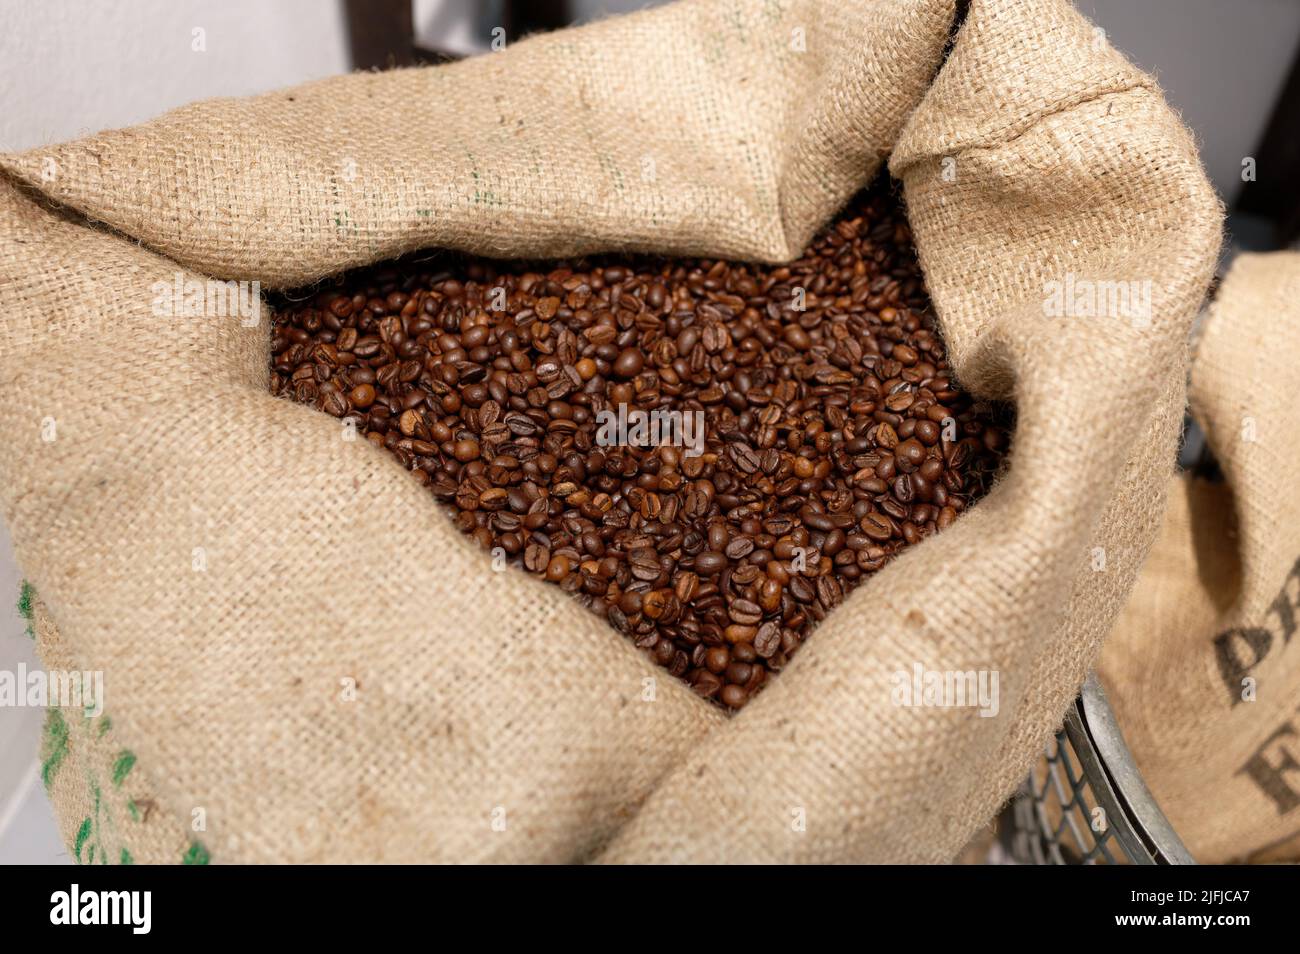 Ein offener Jutebeutel mit gerösteten Kaffeebohnen Stockfoto